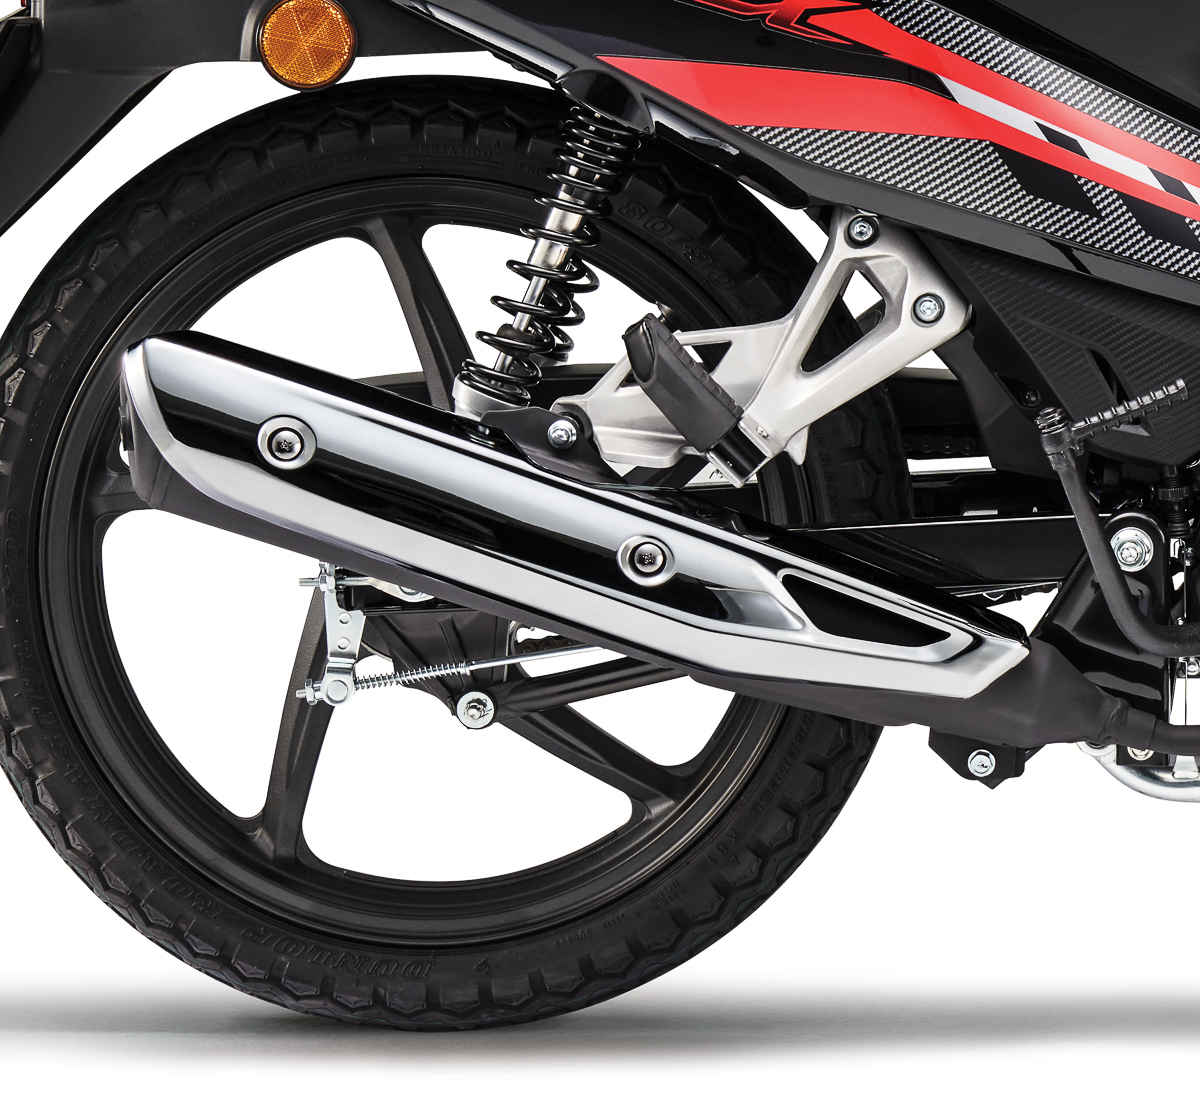 2020-honda-wave-alpha-price-launch-malaysia-2 - Motorcycle news ...